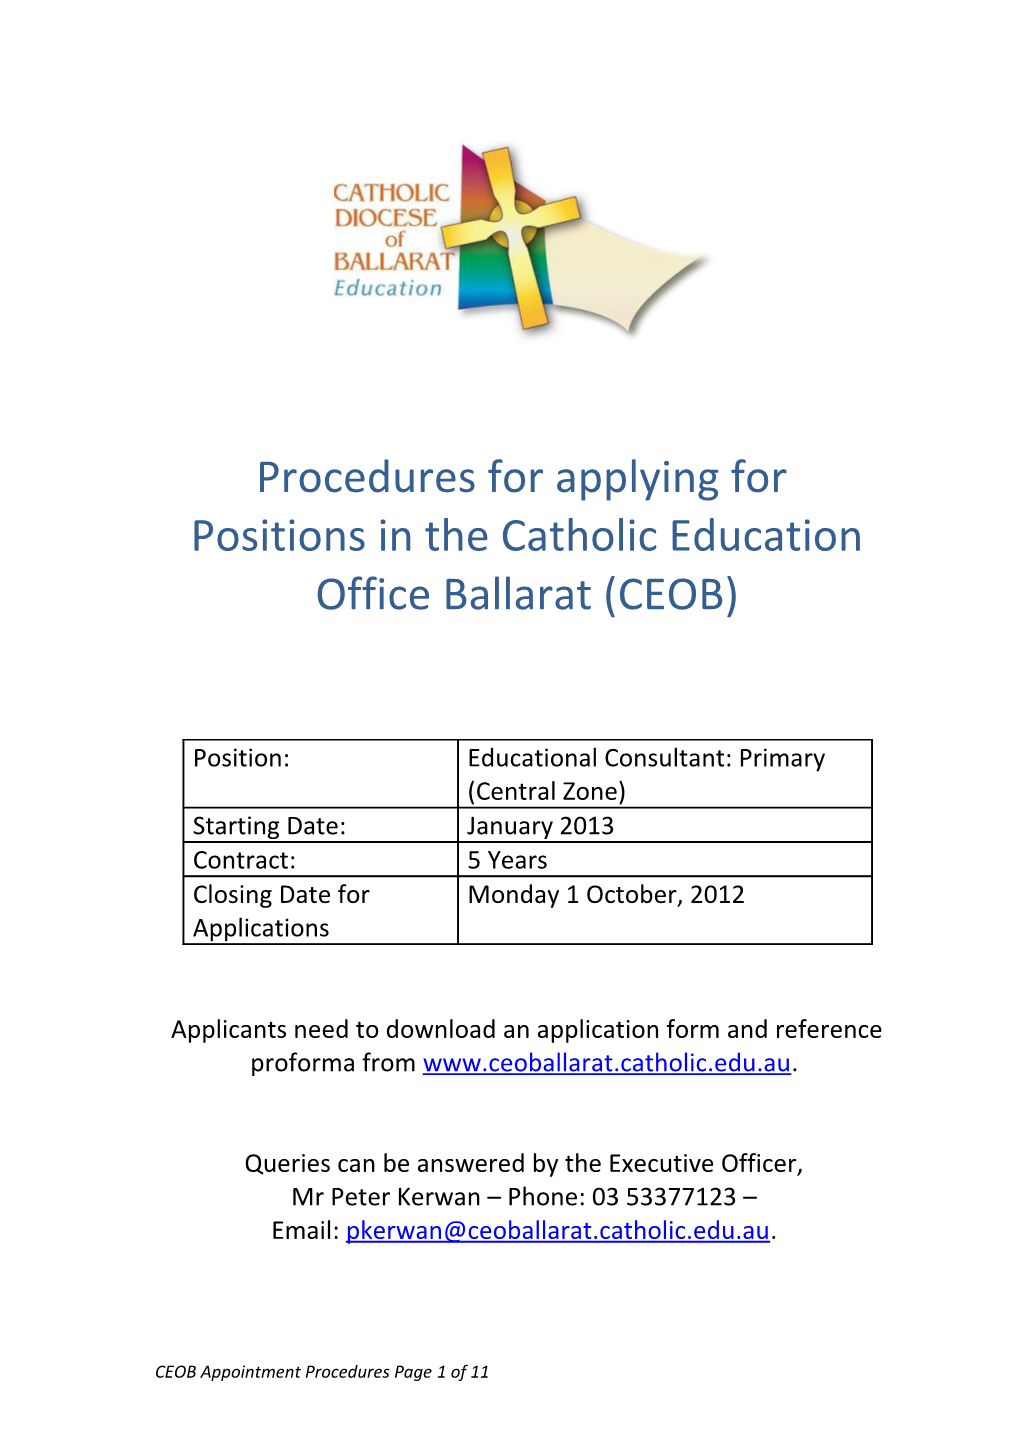 Positions in the Catholic Education Office Ballarat (CEOB)